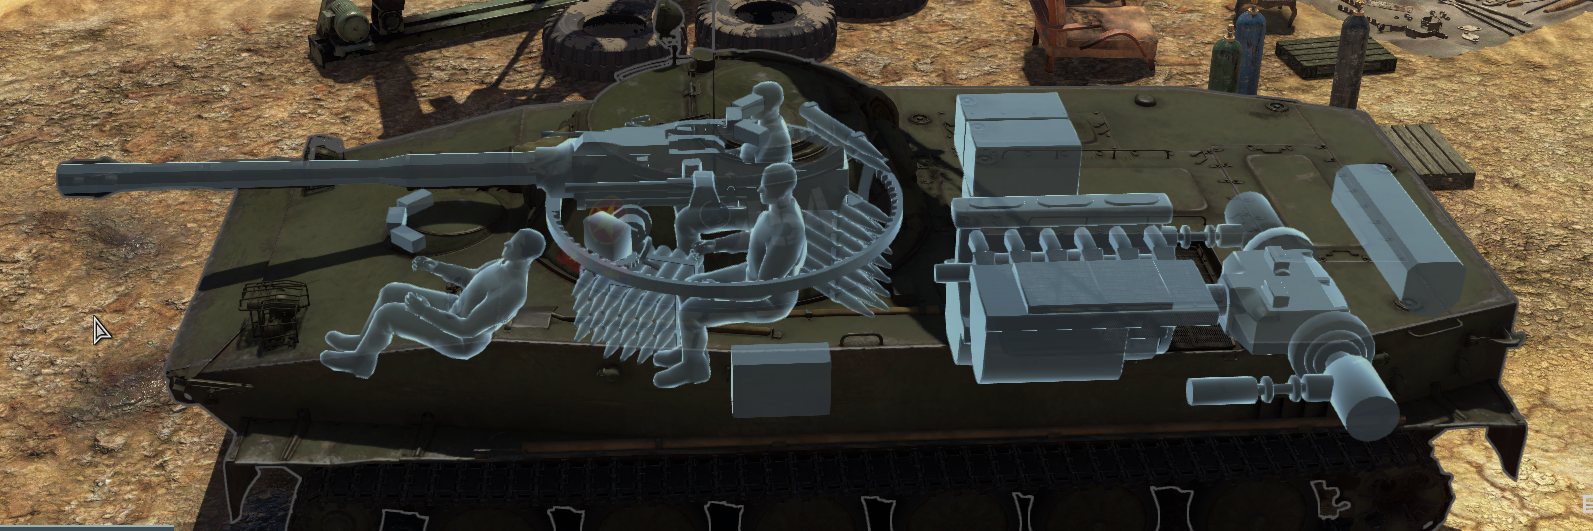 Базовой п т. ПНВ пт 76. Пт-76 плавающий танк. Пт 76 вар Тандер. Танк пт-76-57.